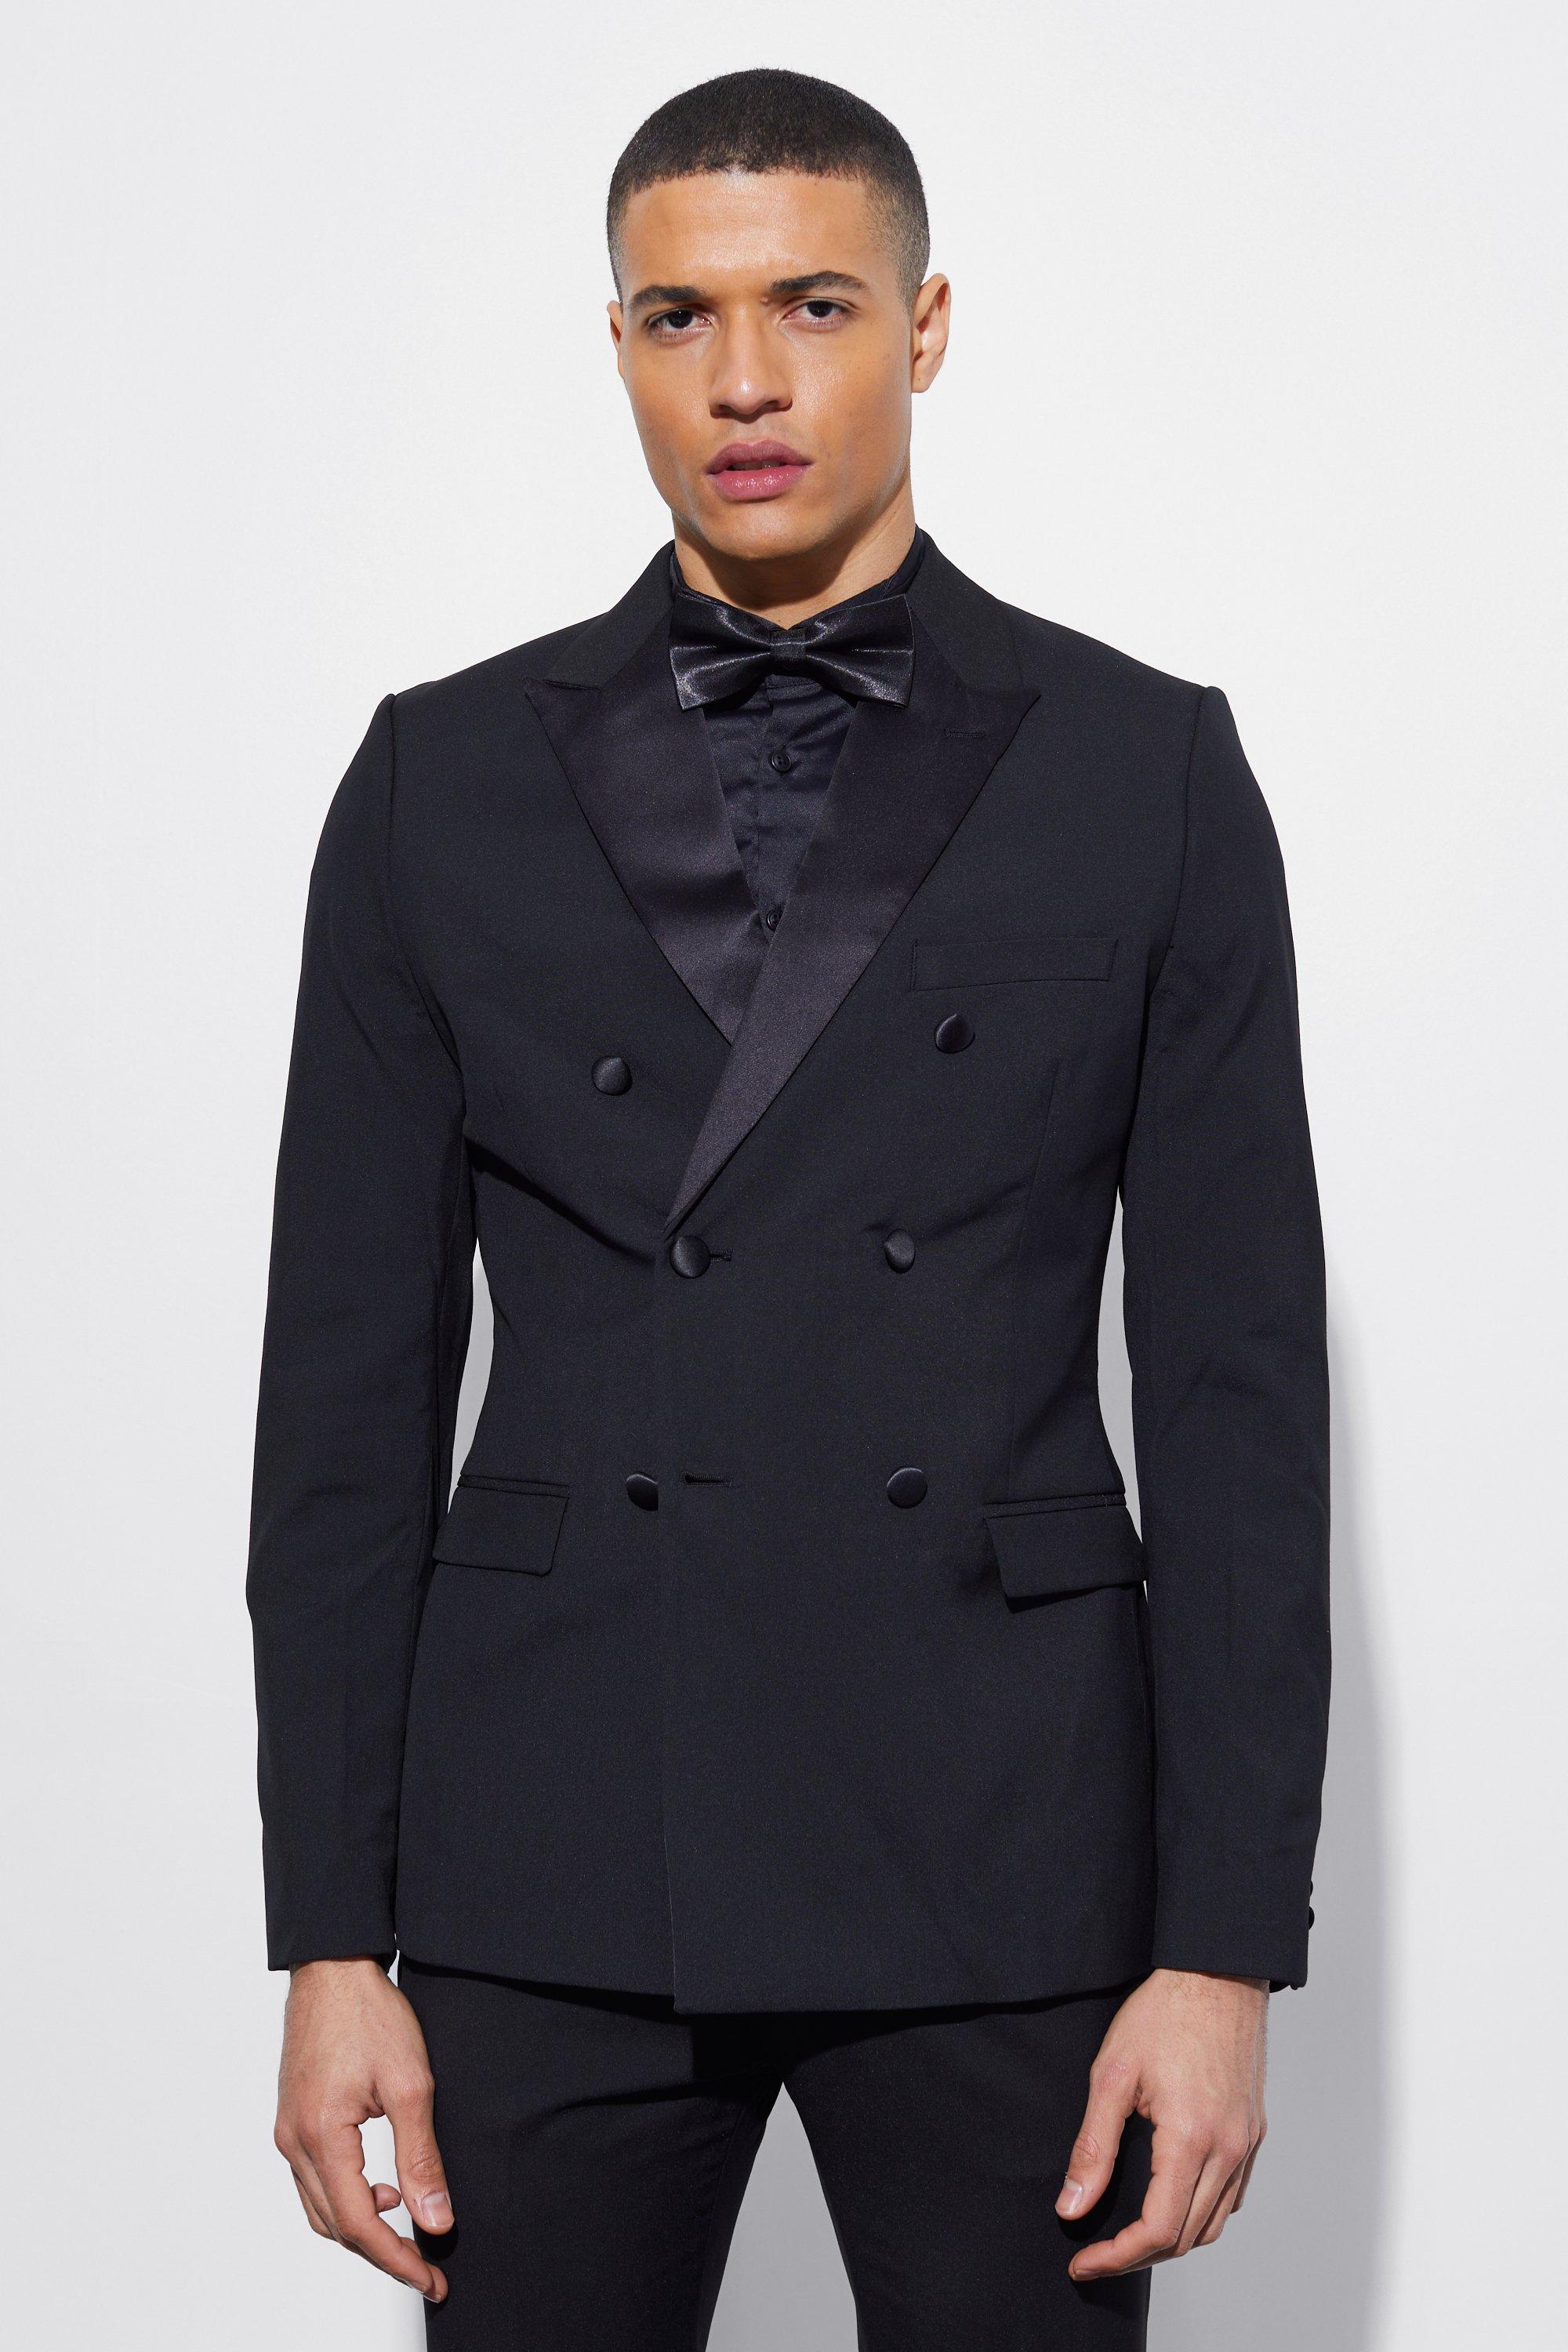 mens black skinny tuxedo double breasted suit jacket, black